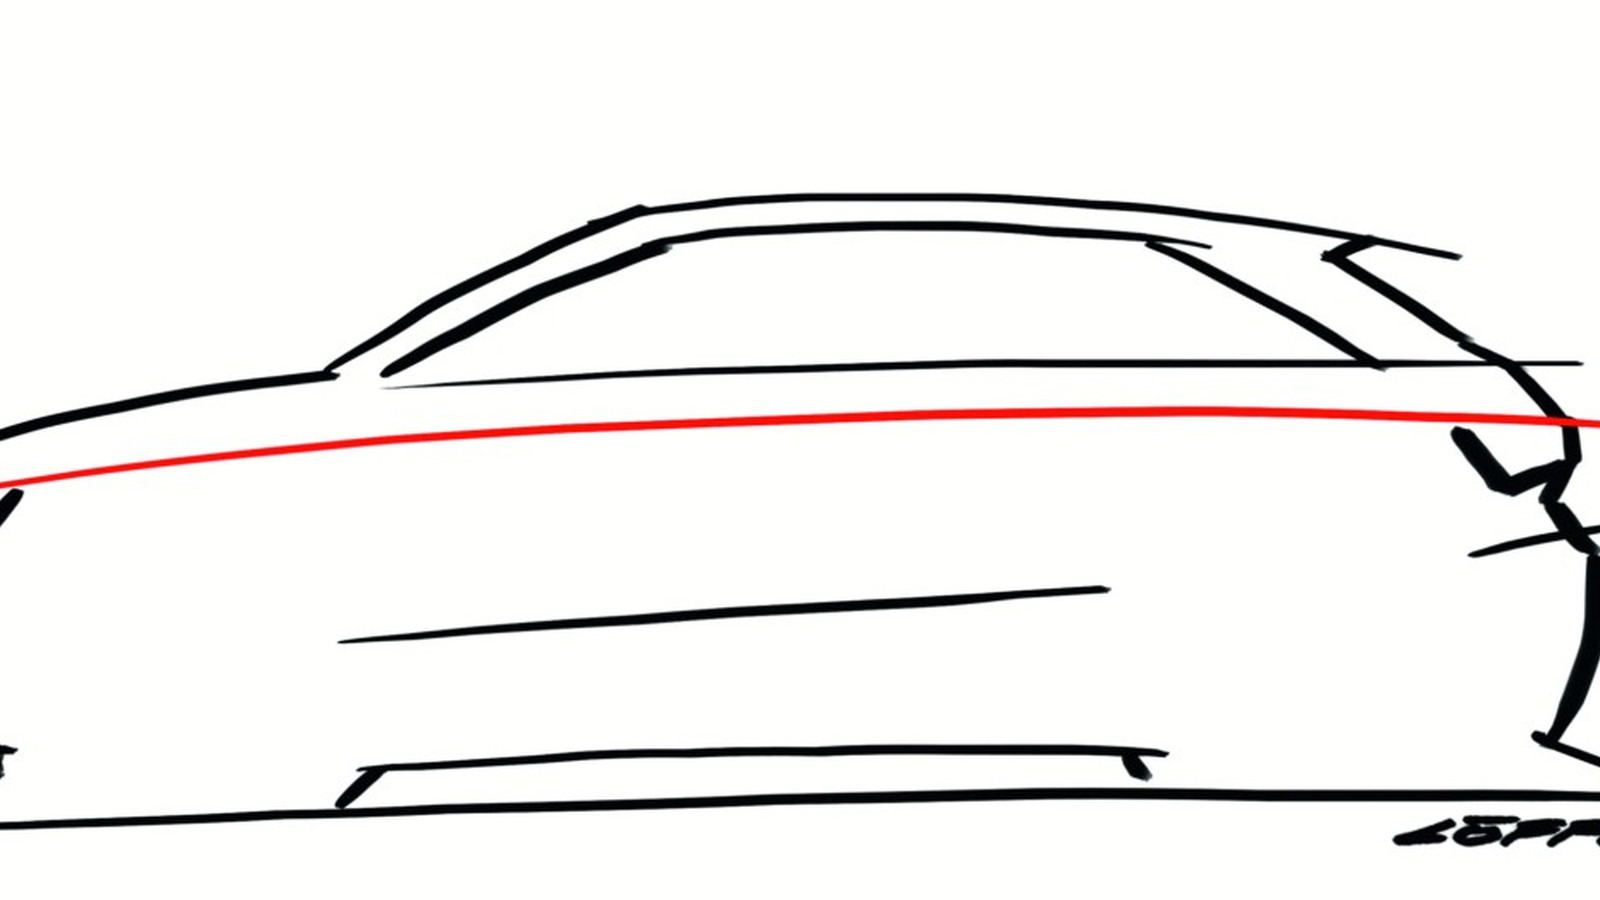 2011 Audi A1 design preview